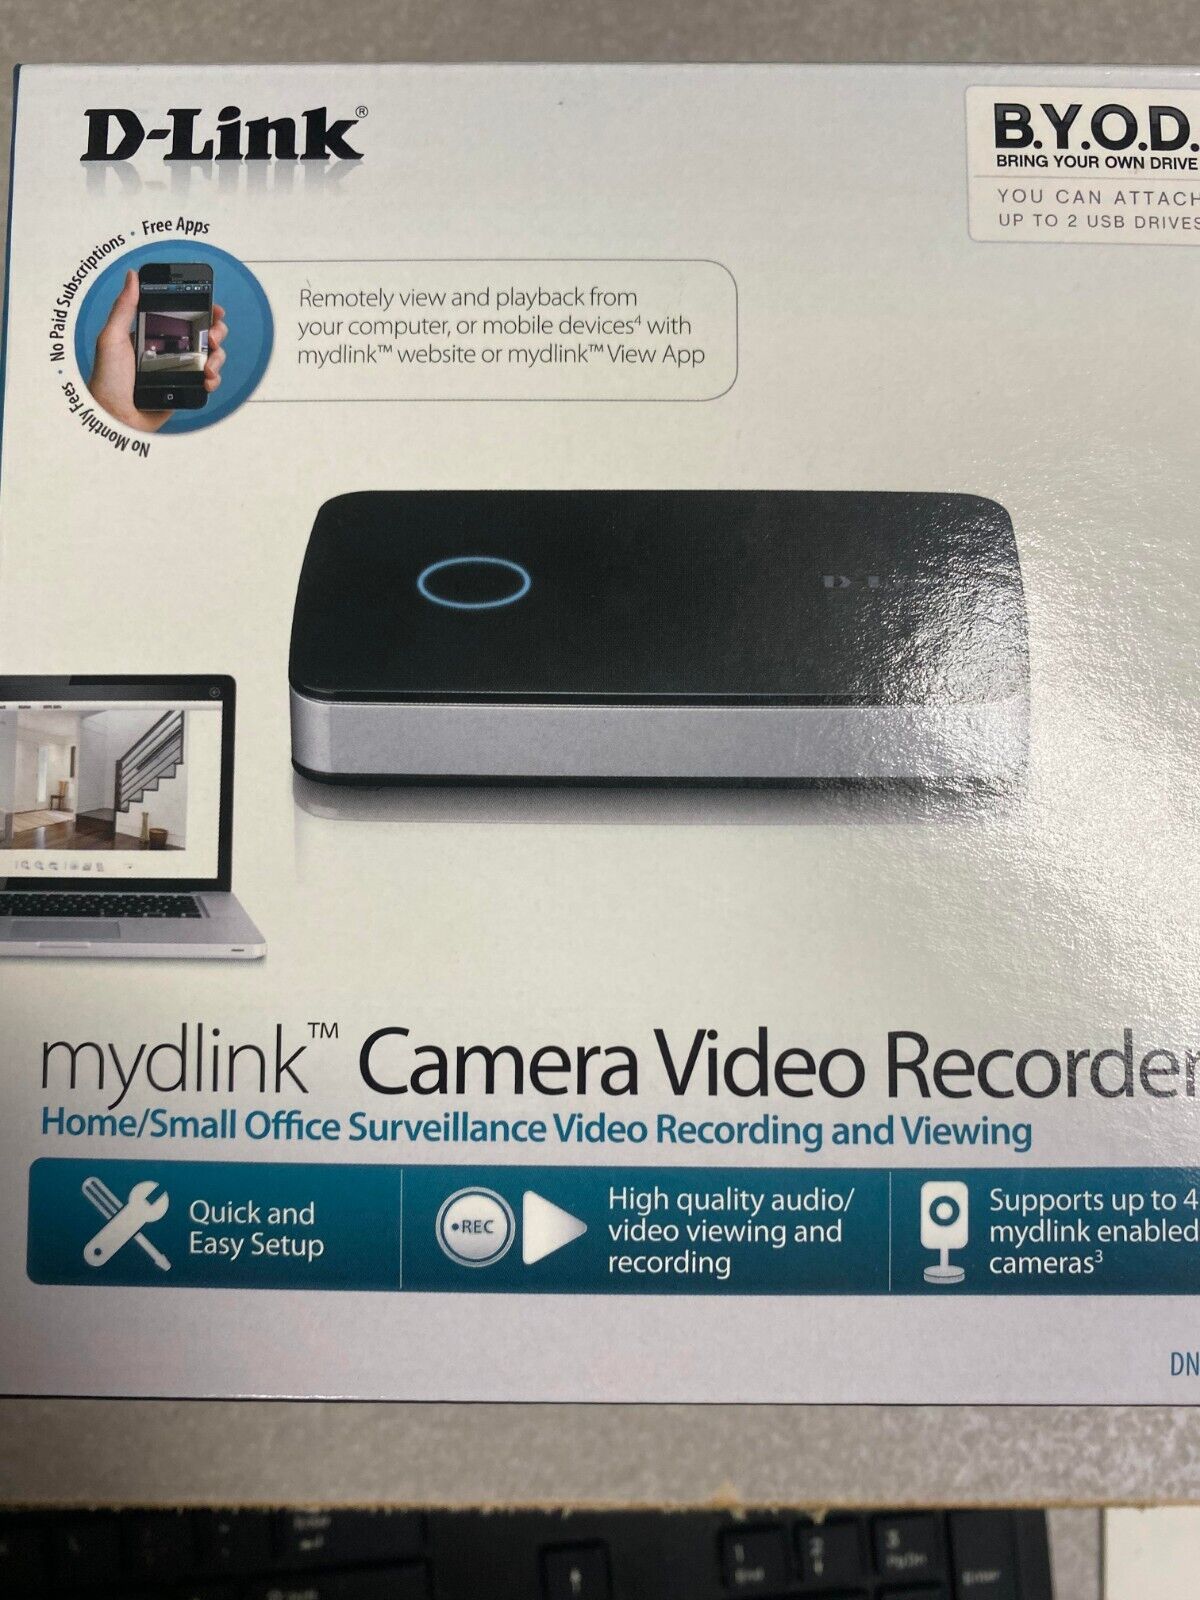 D-LINK Camera Video Recorder mydlink Enabled DNR-202L Office Surveillance 